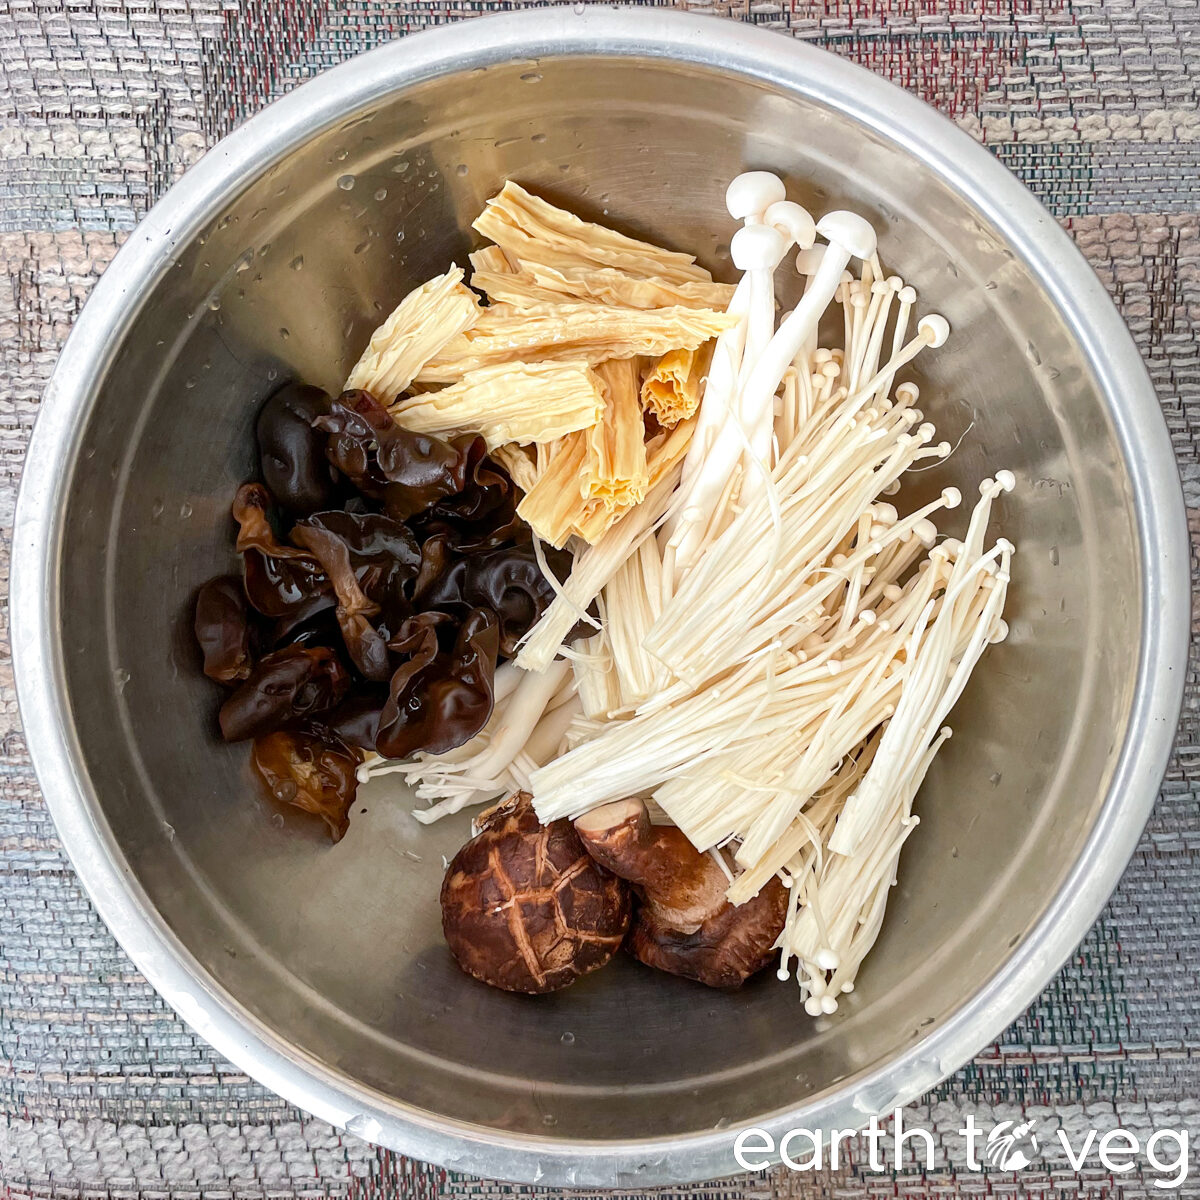 mushrooms, fuzhu (beancurd sticks), wood ear fungus